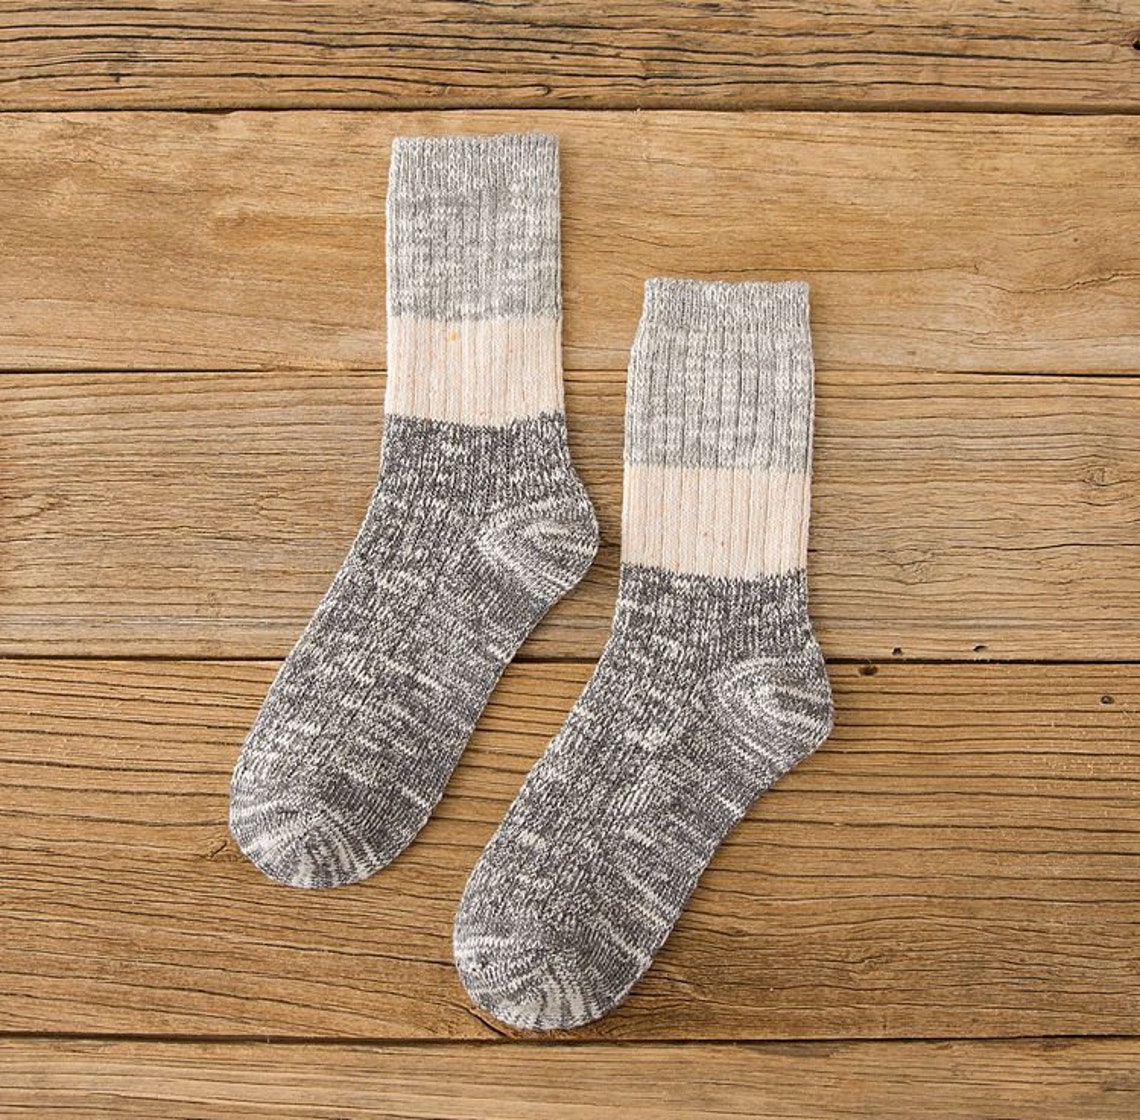 Boho knit cotton socks mid calf crew socks short boot socks | Etsy